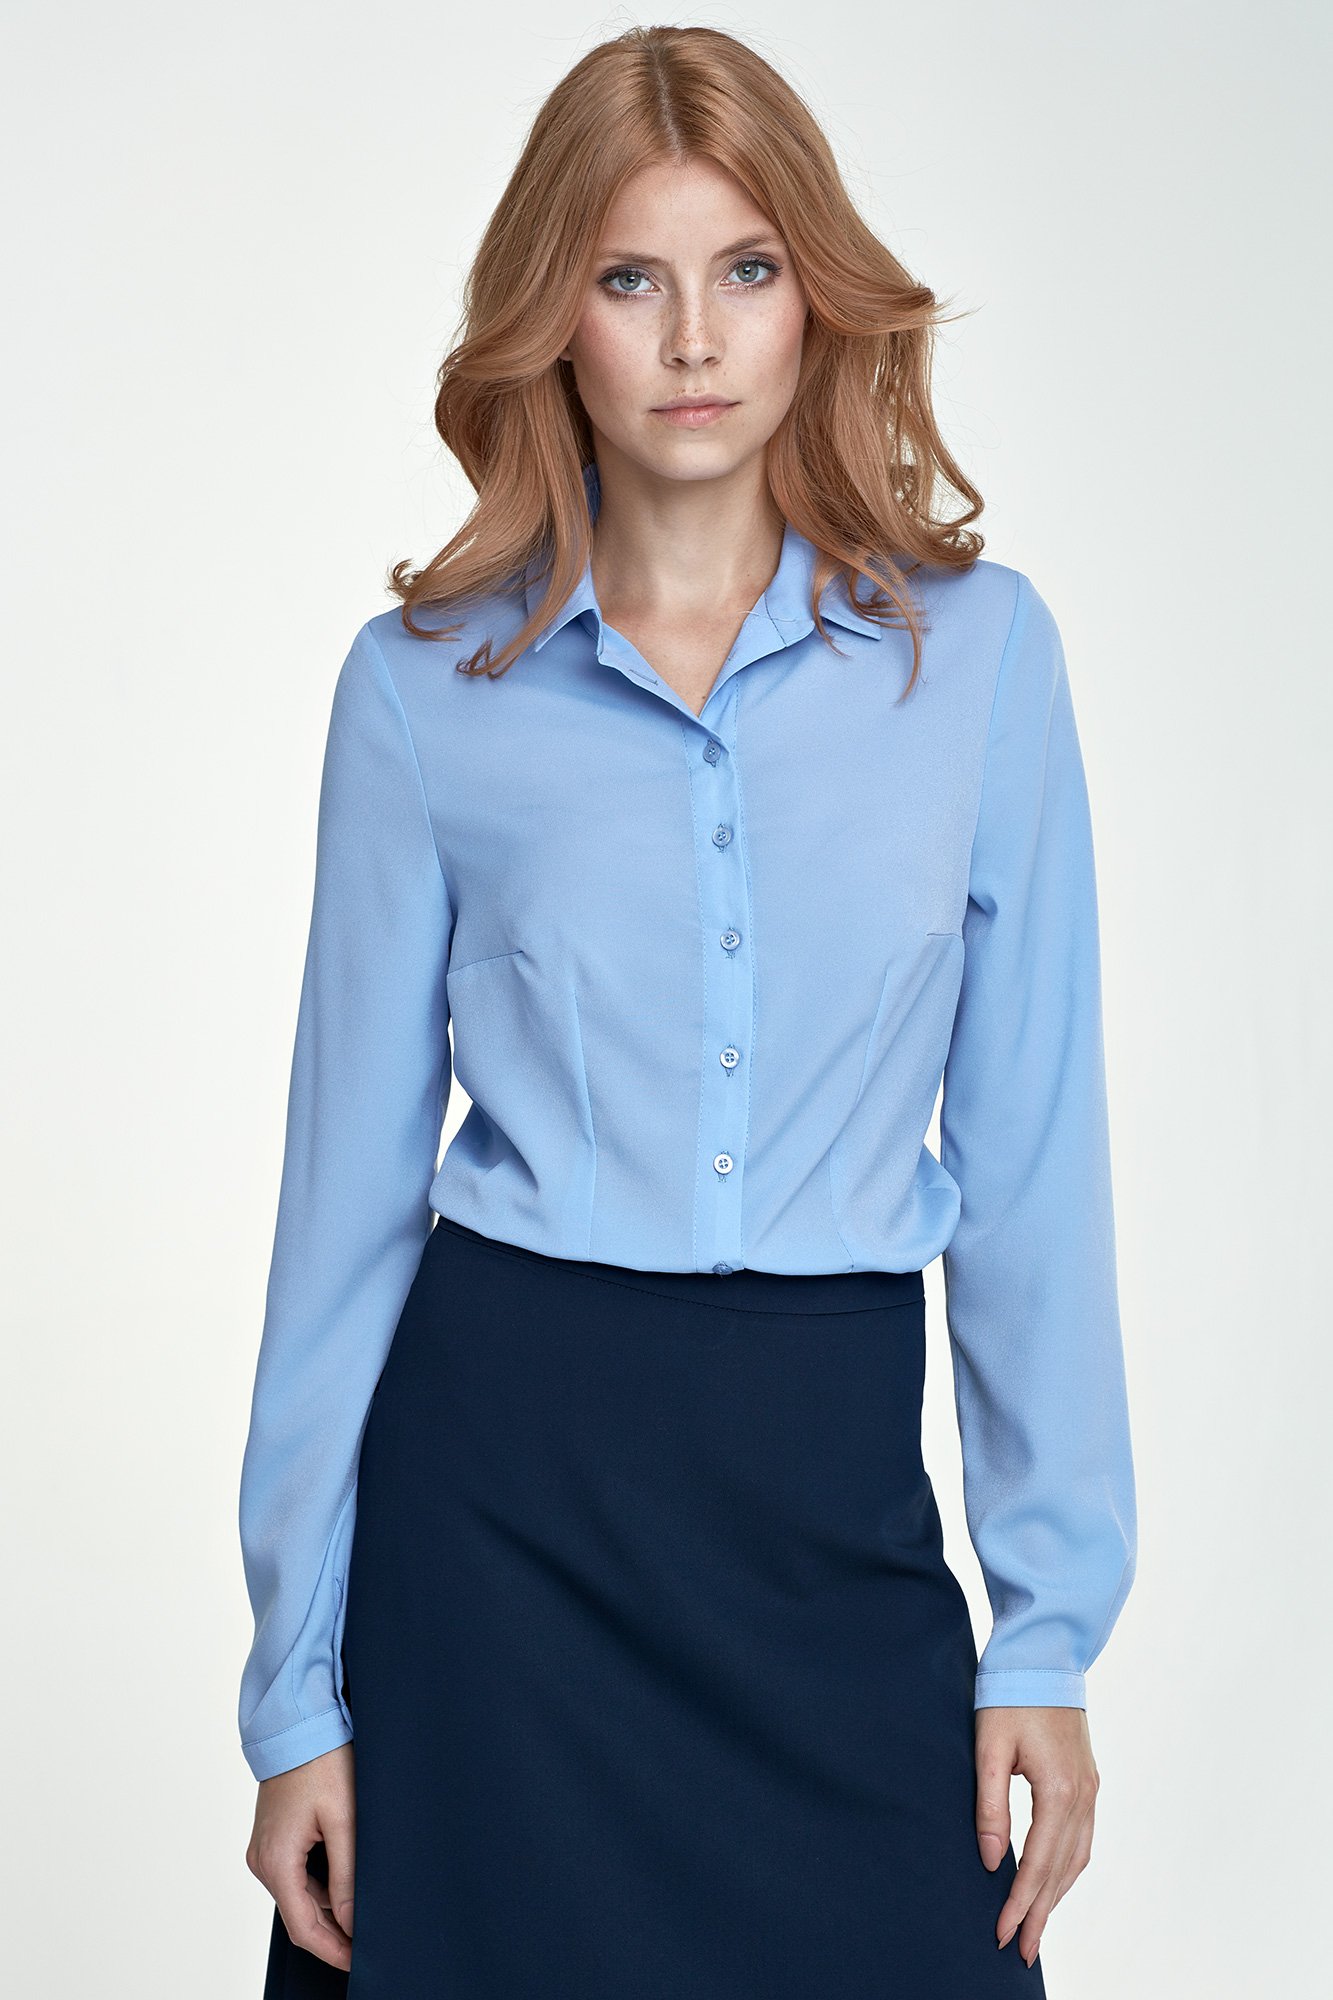 Купить голубые блузку. Рубашка Nife бирюза. Рубашка женская. Блузка женская.